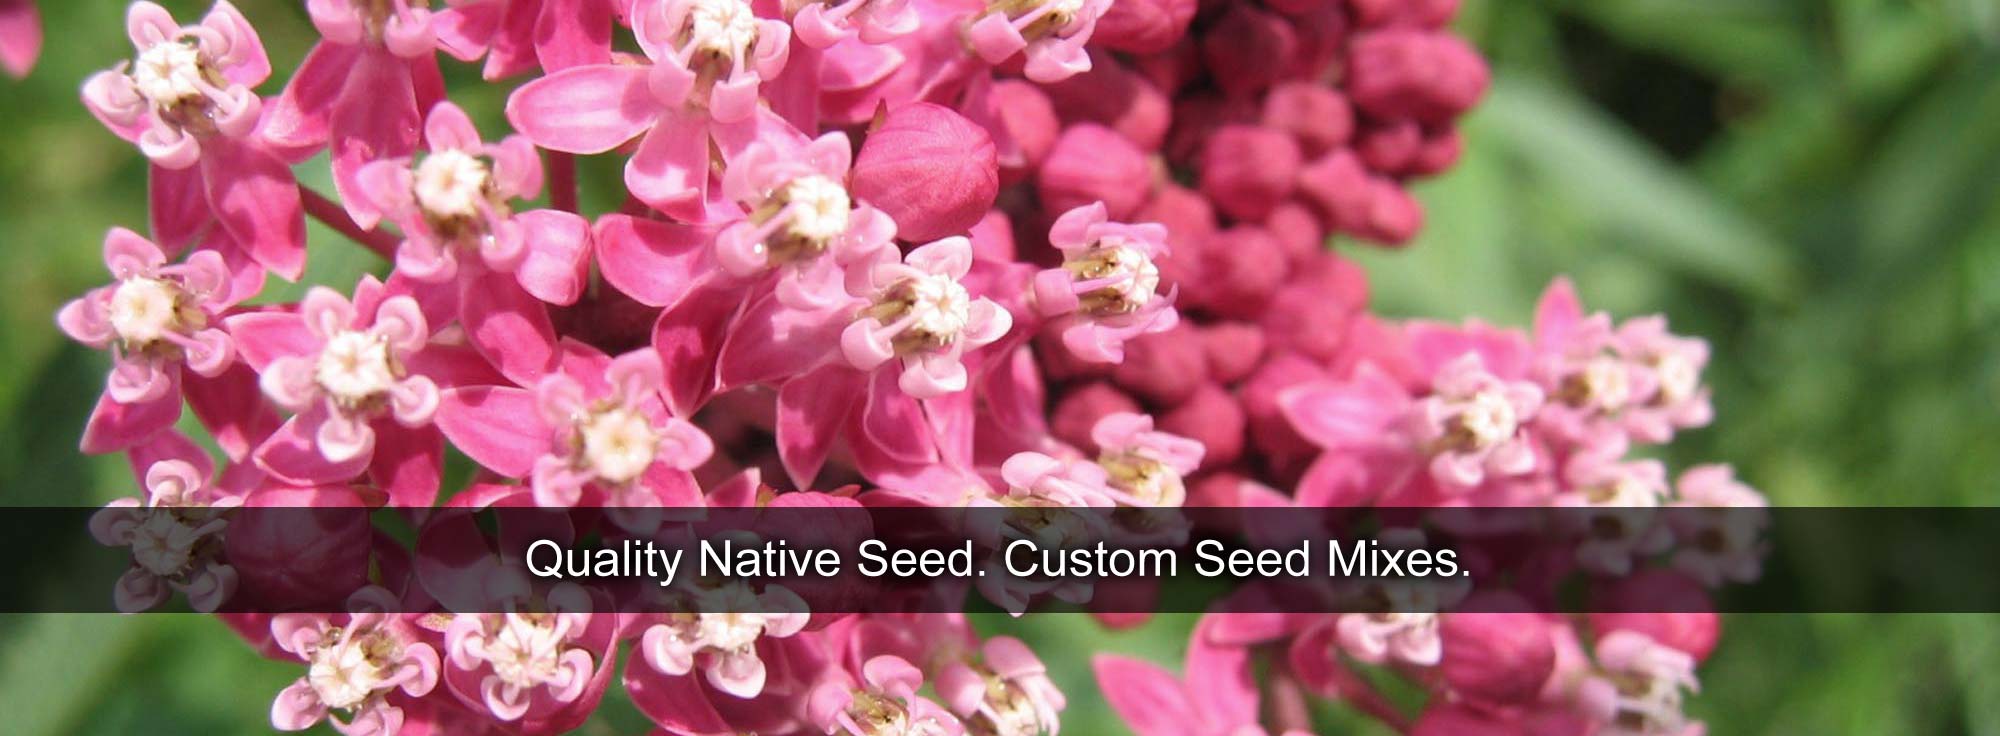 Quality Native Seed. Custom Seed Mixes.